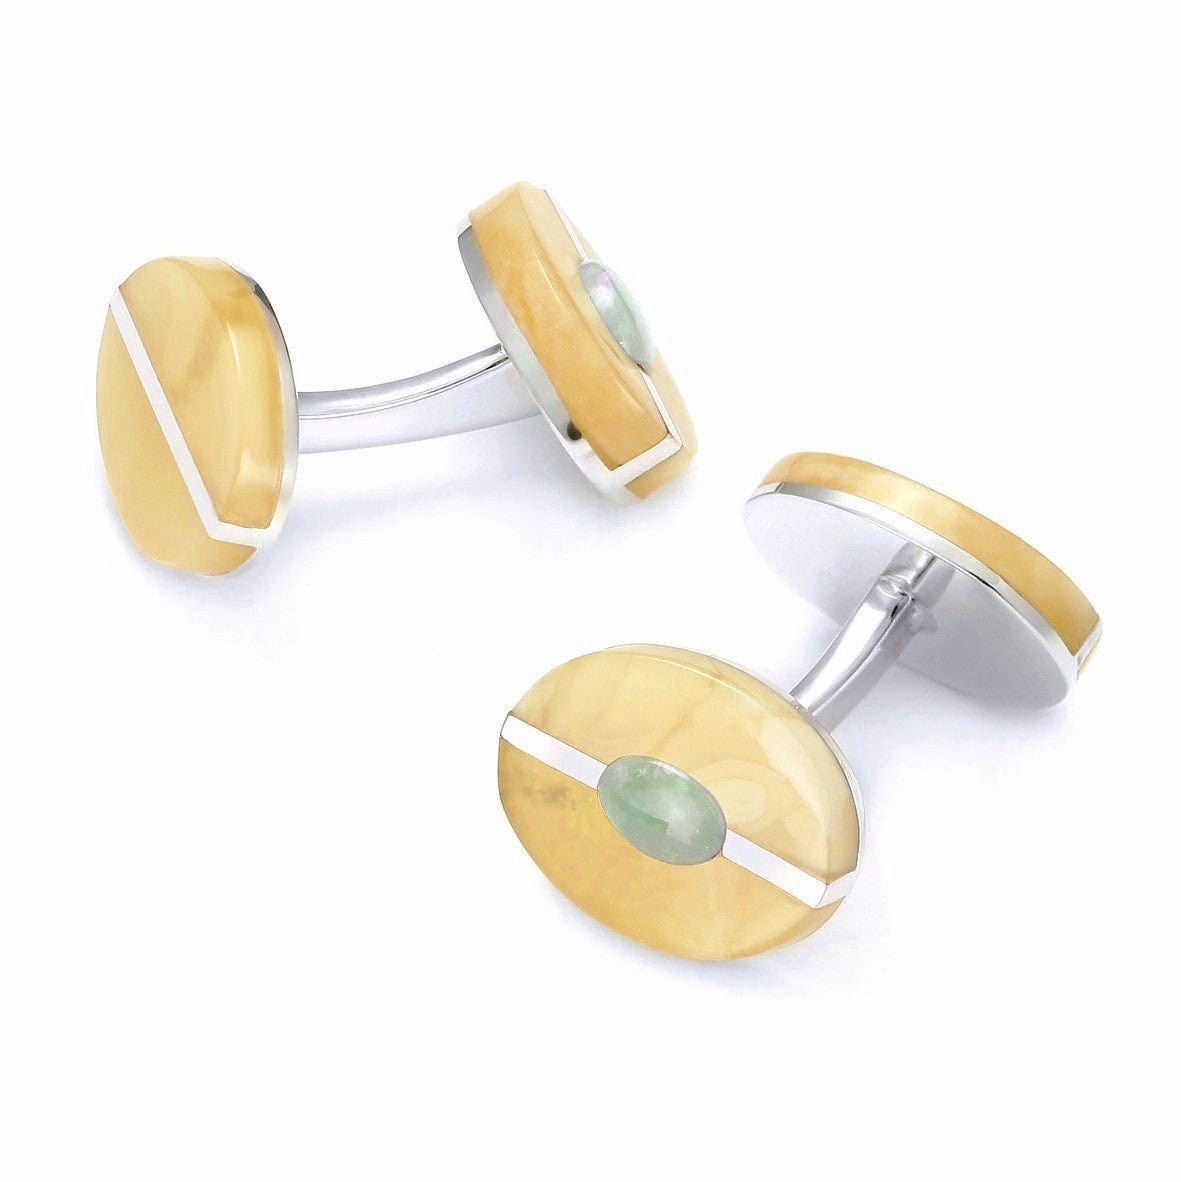 White Baltic Amber & Australian Opal Silver Cufflinks BEATA GREGORCZYK